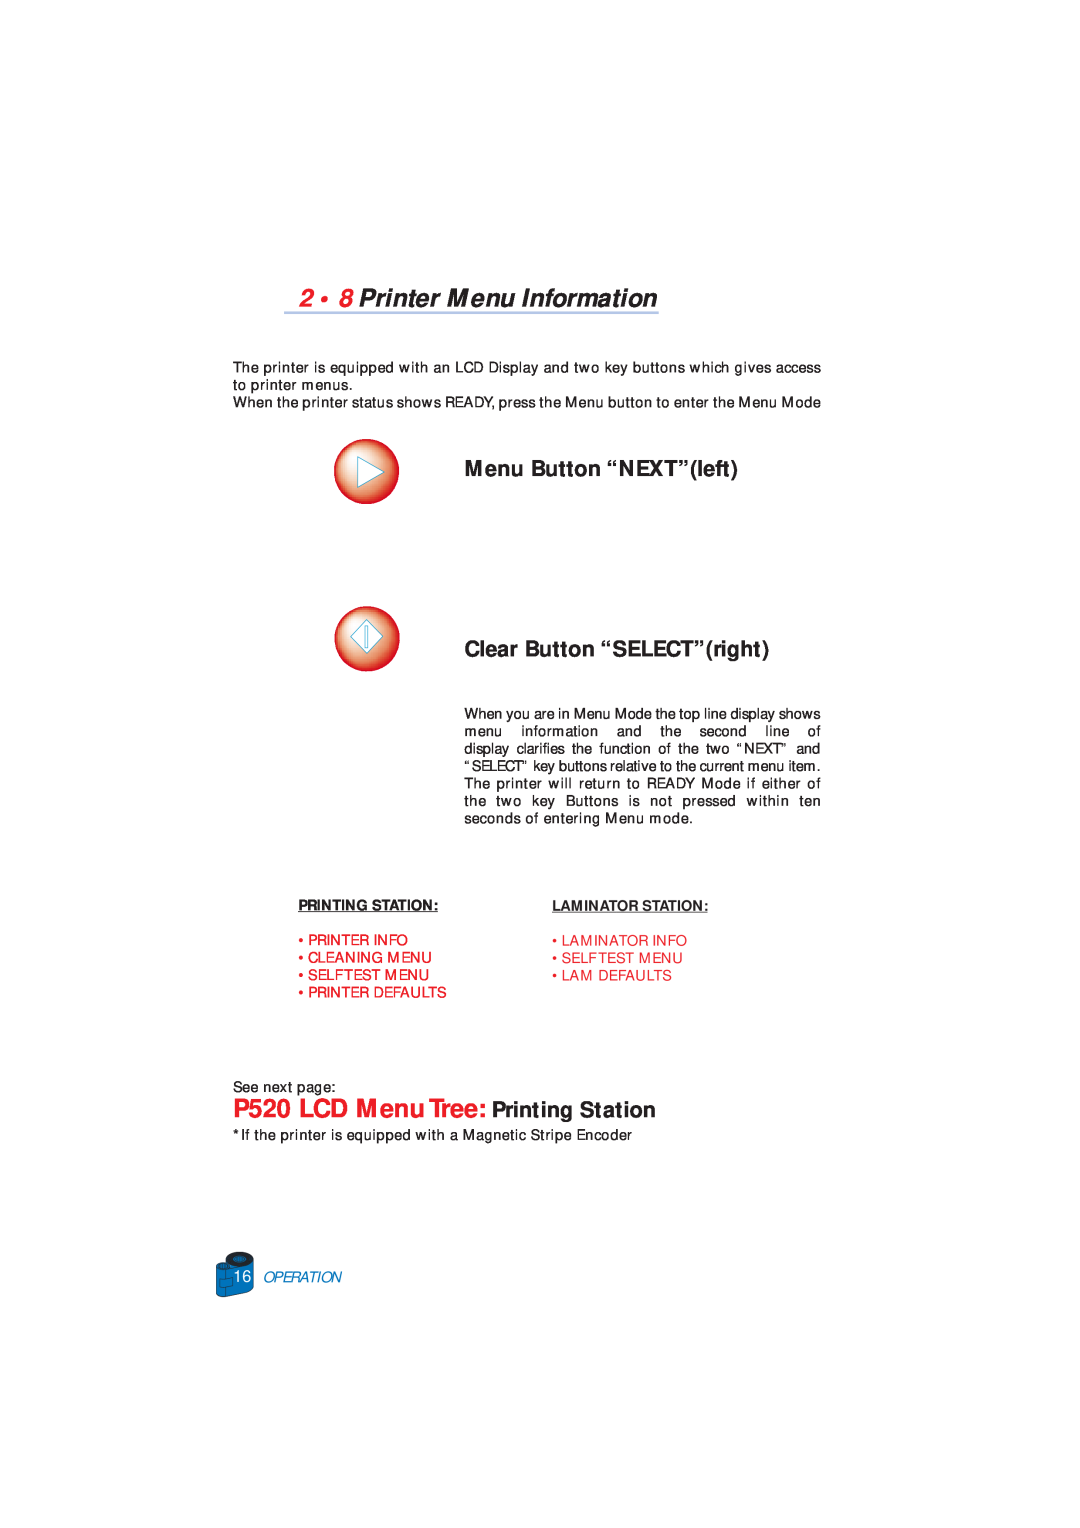 Zebra Technologies P520 2 8 Printer Menu Information, Menu Button “NEXT”left Clear Button “SELECT”right, Operation 